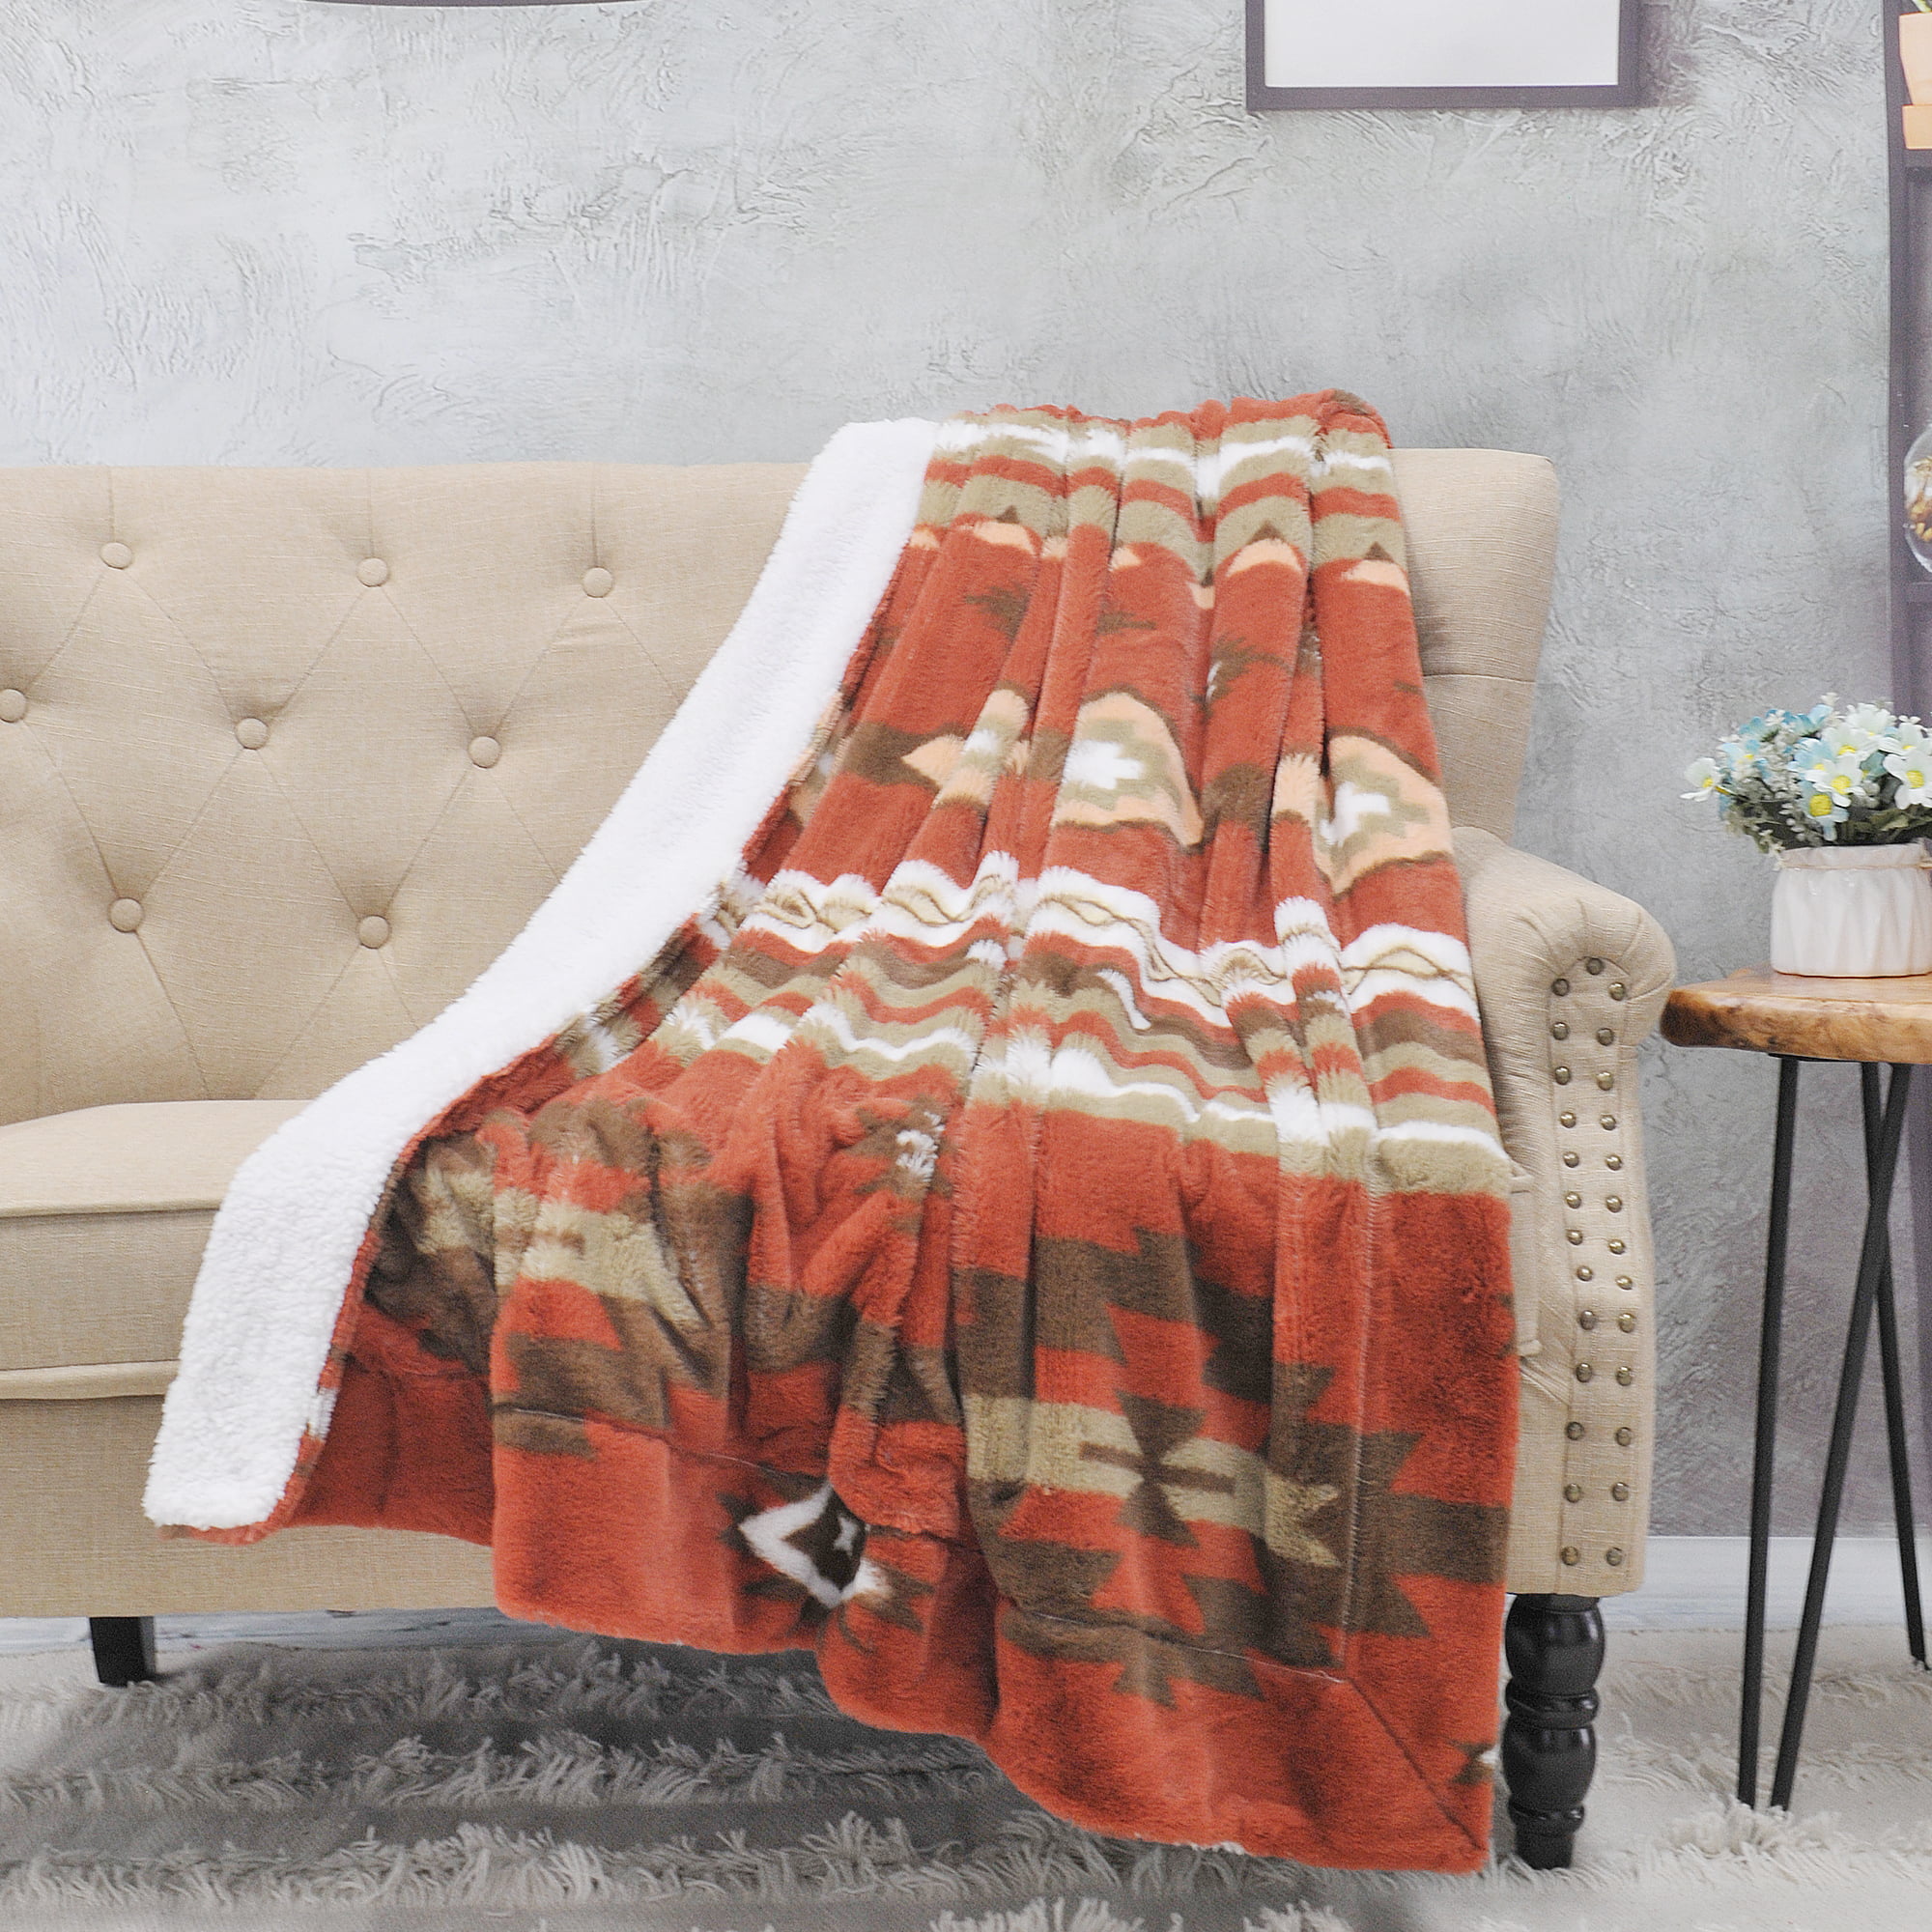 Soft Warm Blanket Southwest Super Cozy Fleece Furniture Bed Throw Burgandy RED 